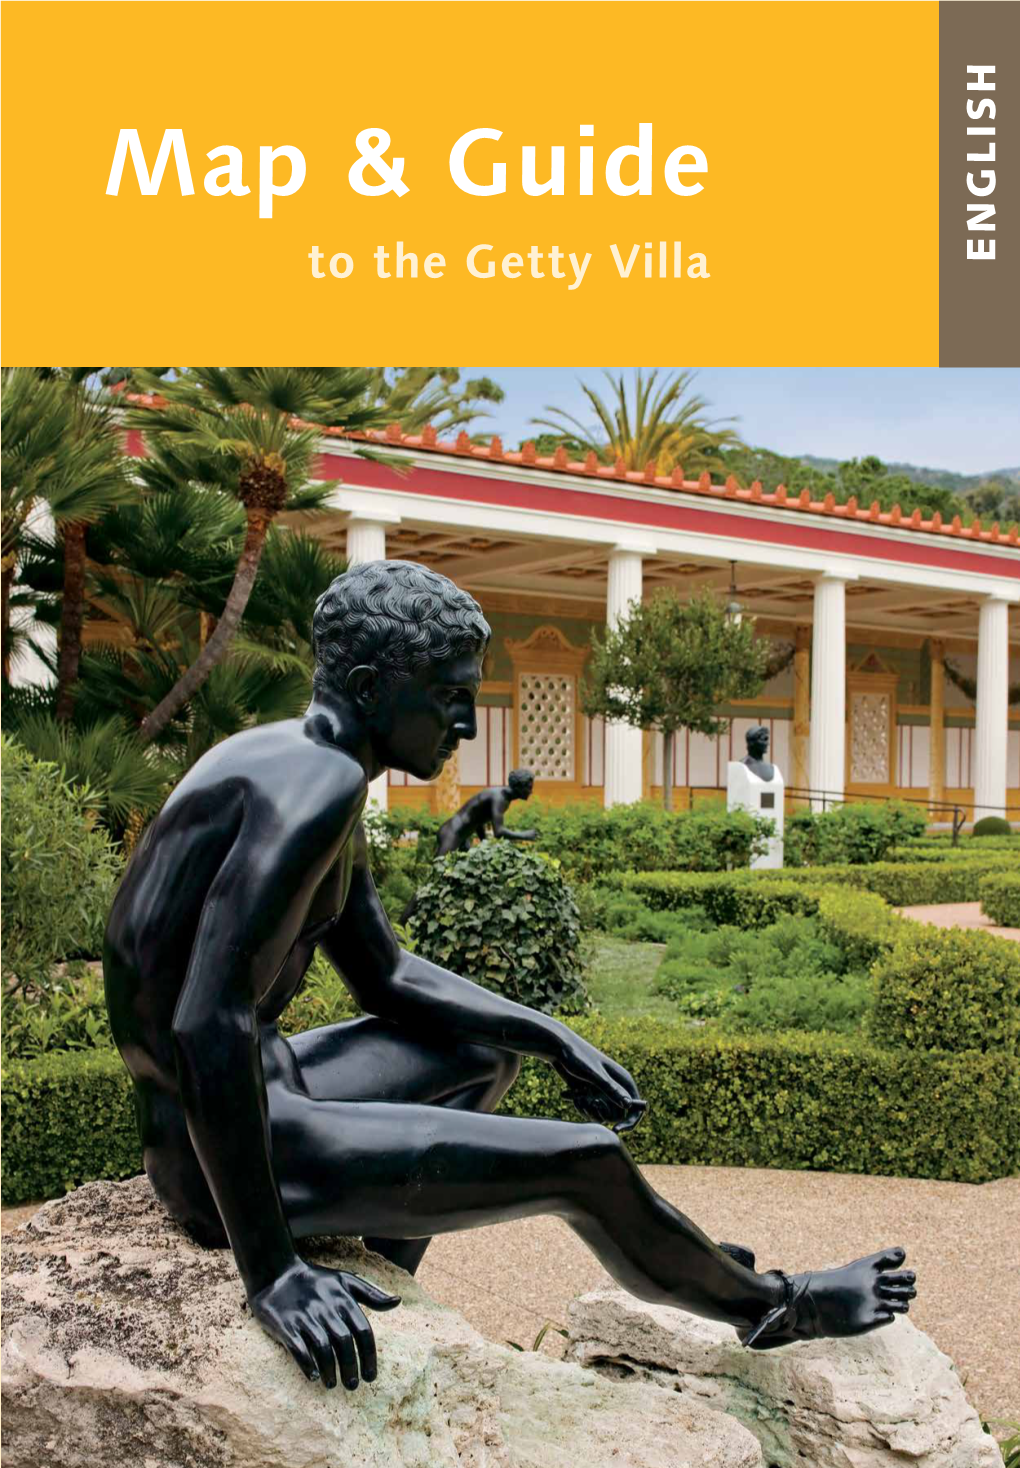 Download the Getty Villa Map & Guide